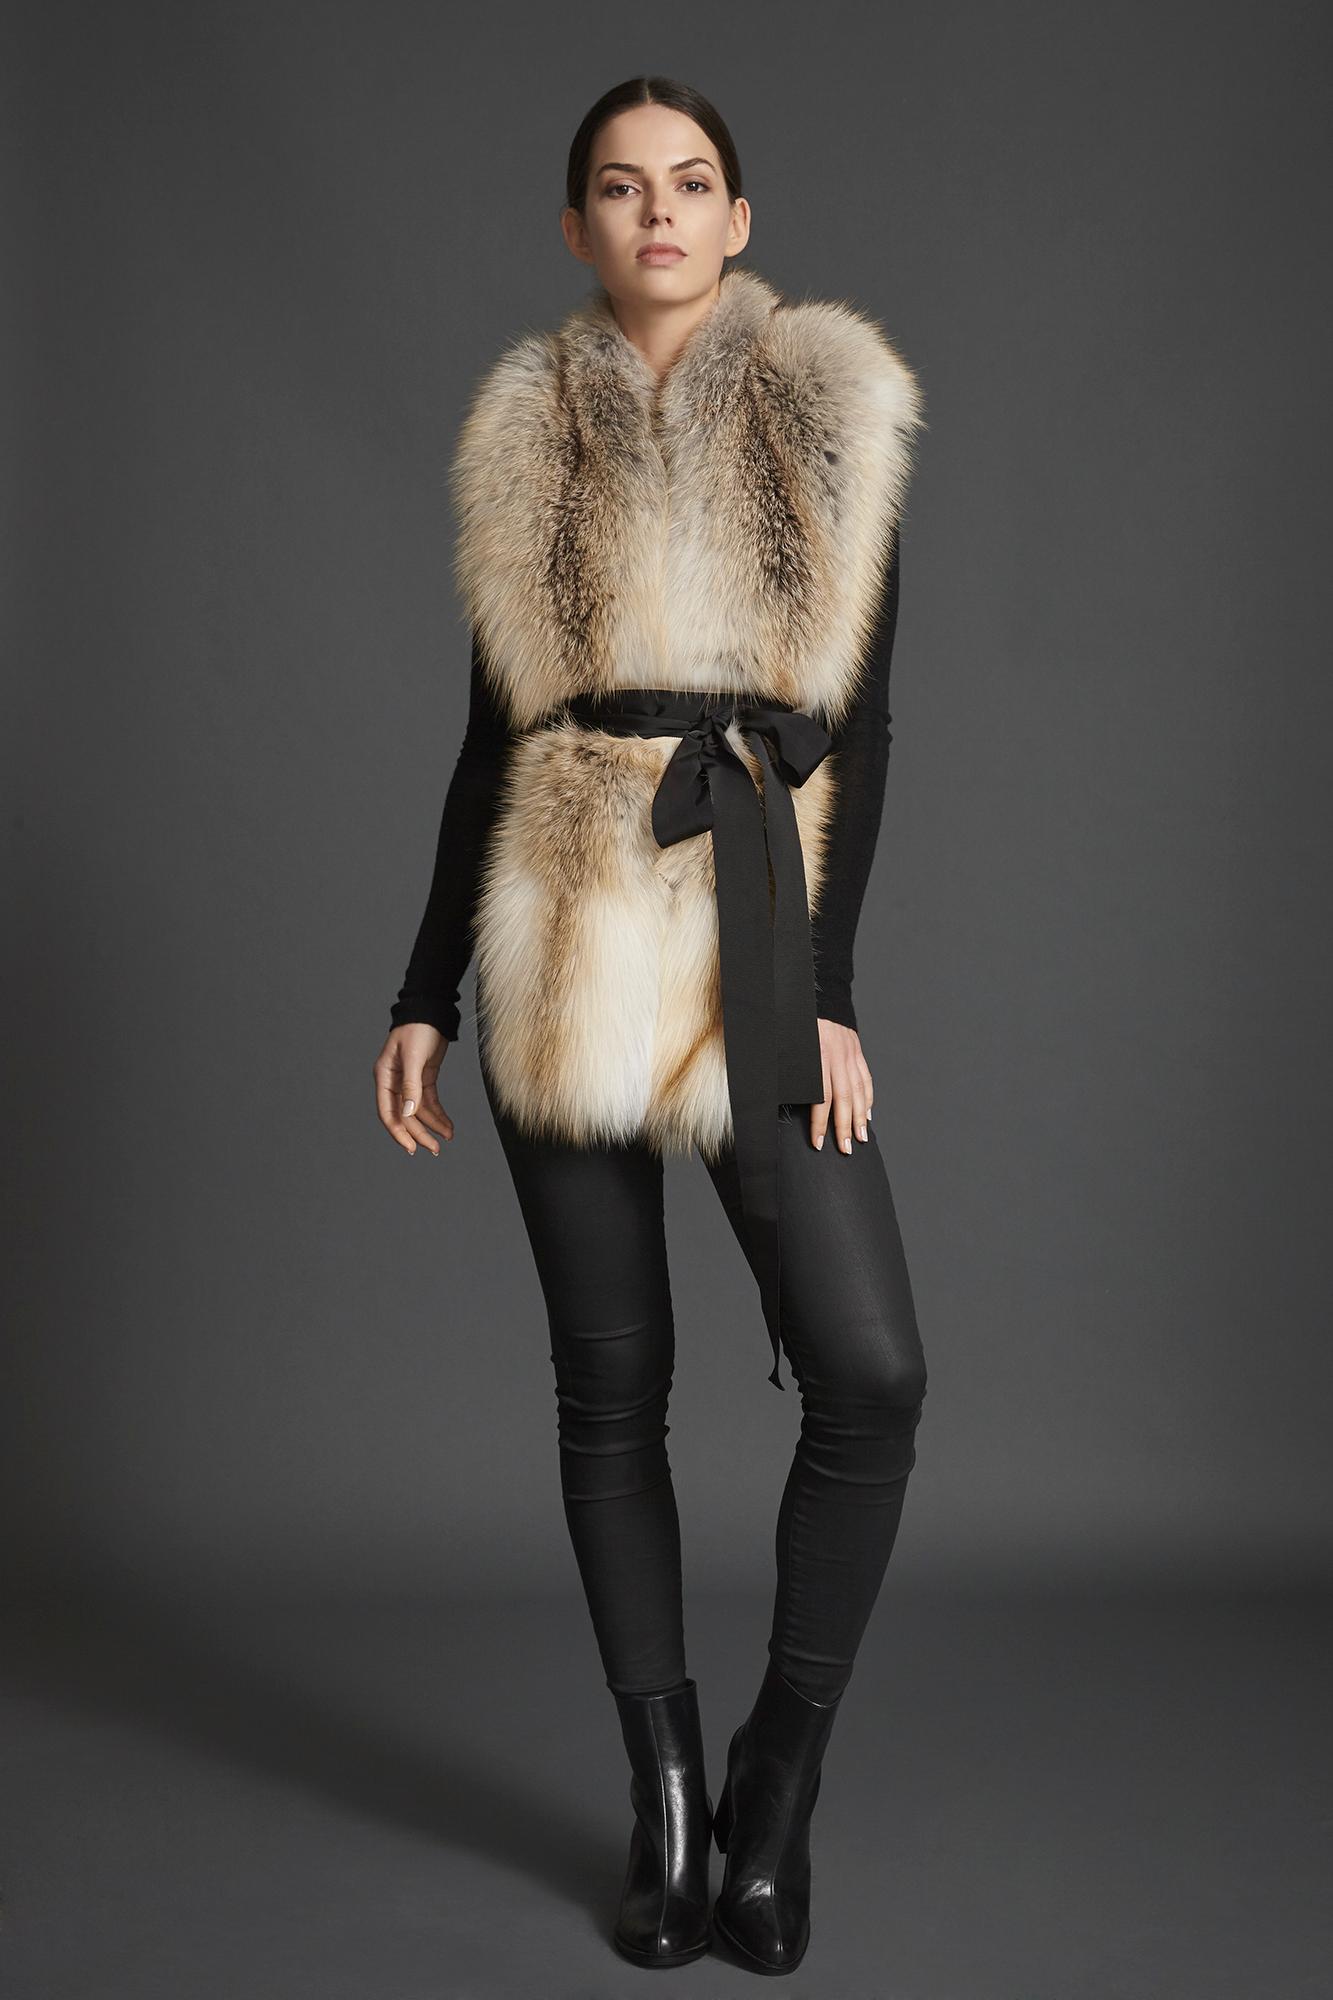 Beige Verheyen London Legacy Stole Scarf Natural Golden Island Fox Fur - Brand New 